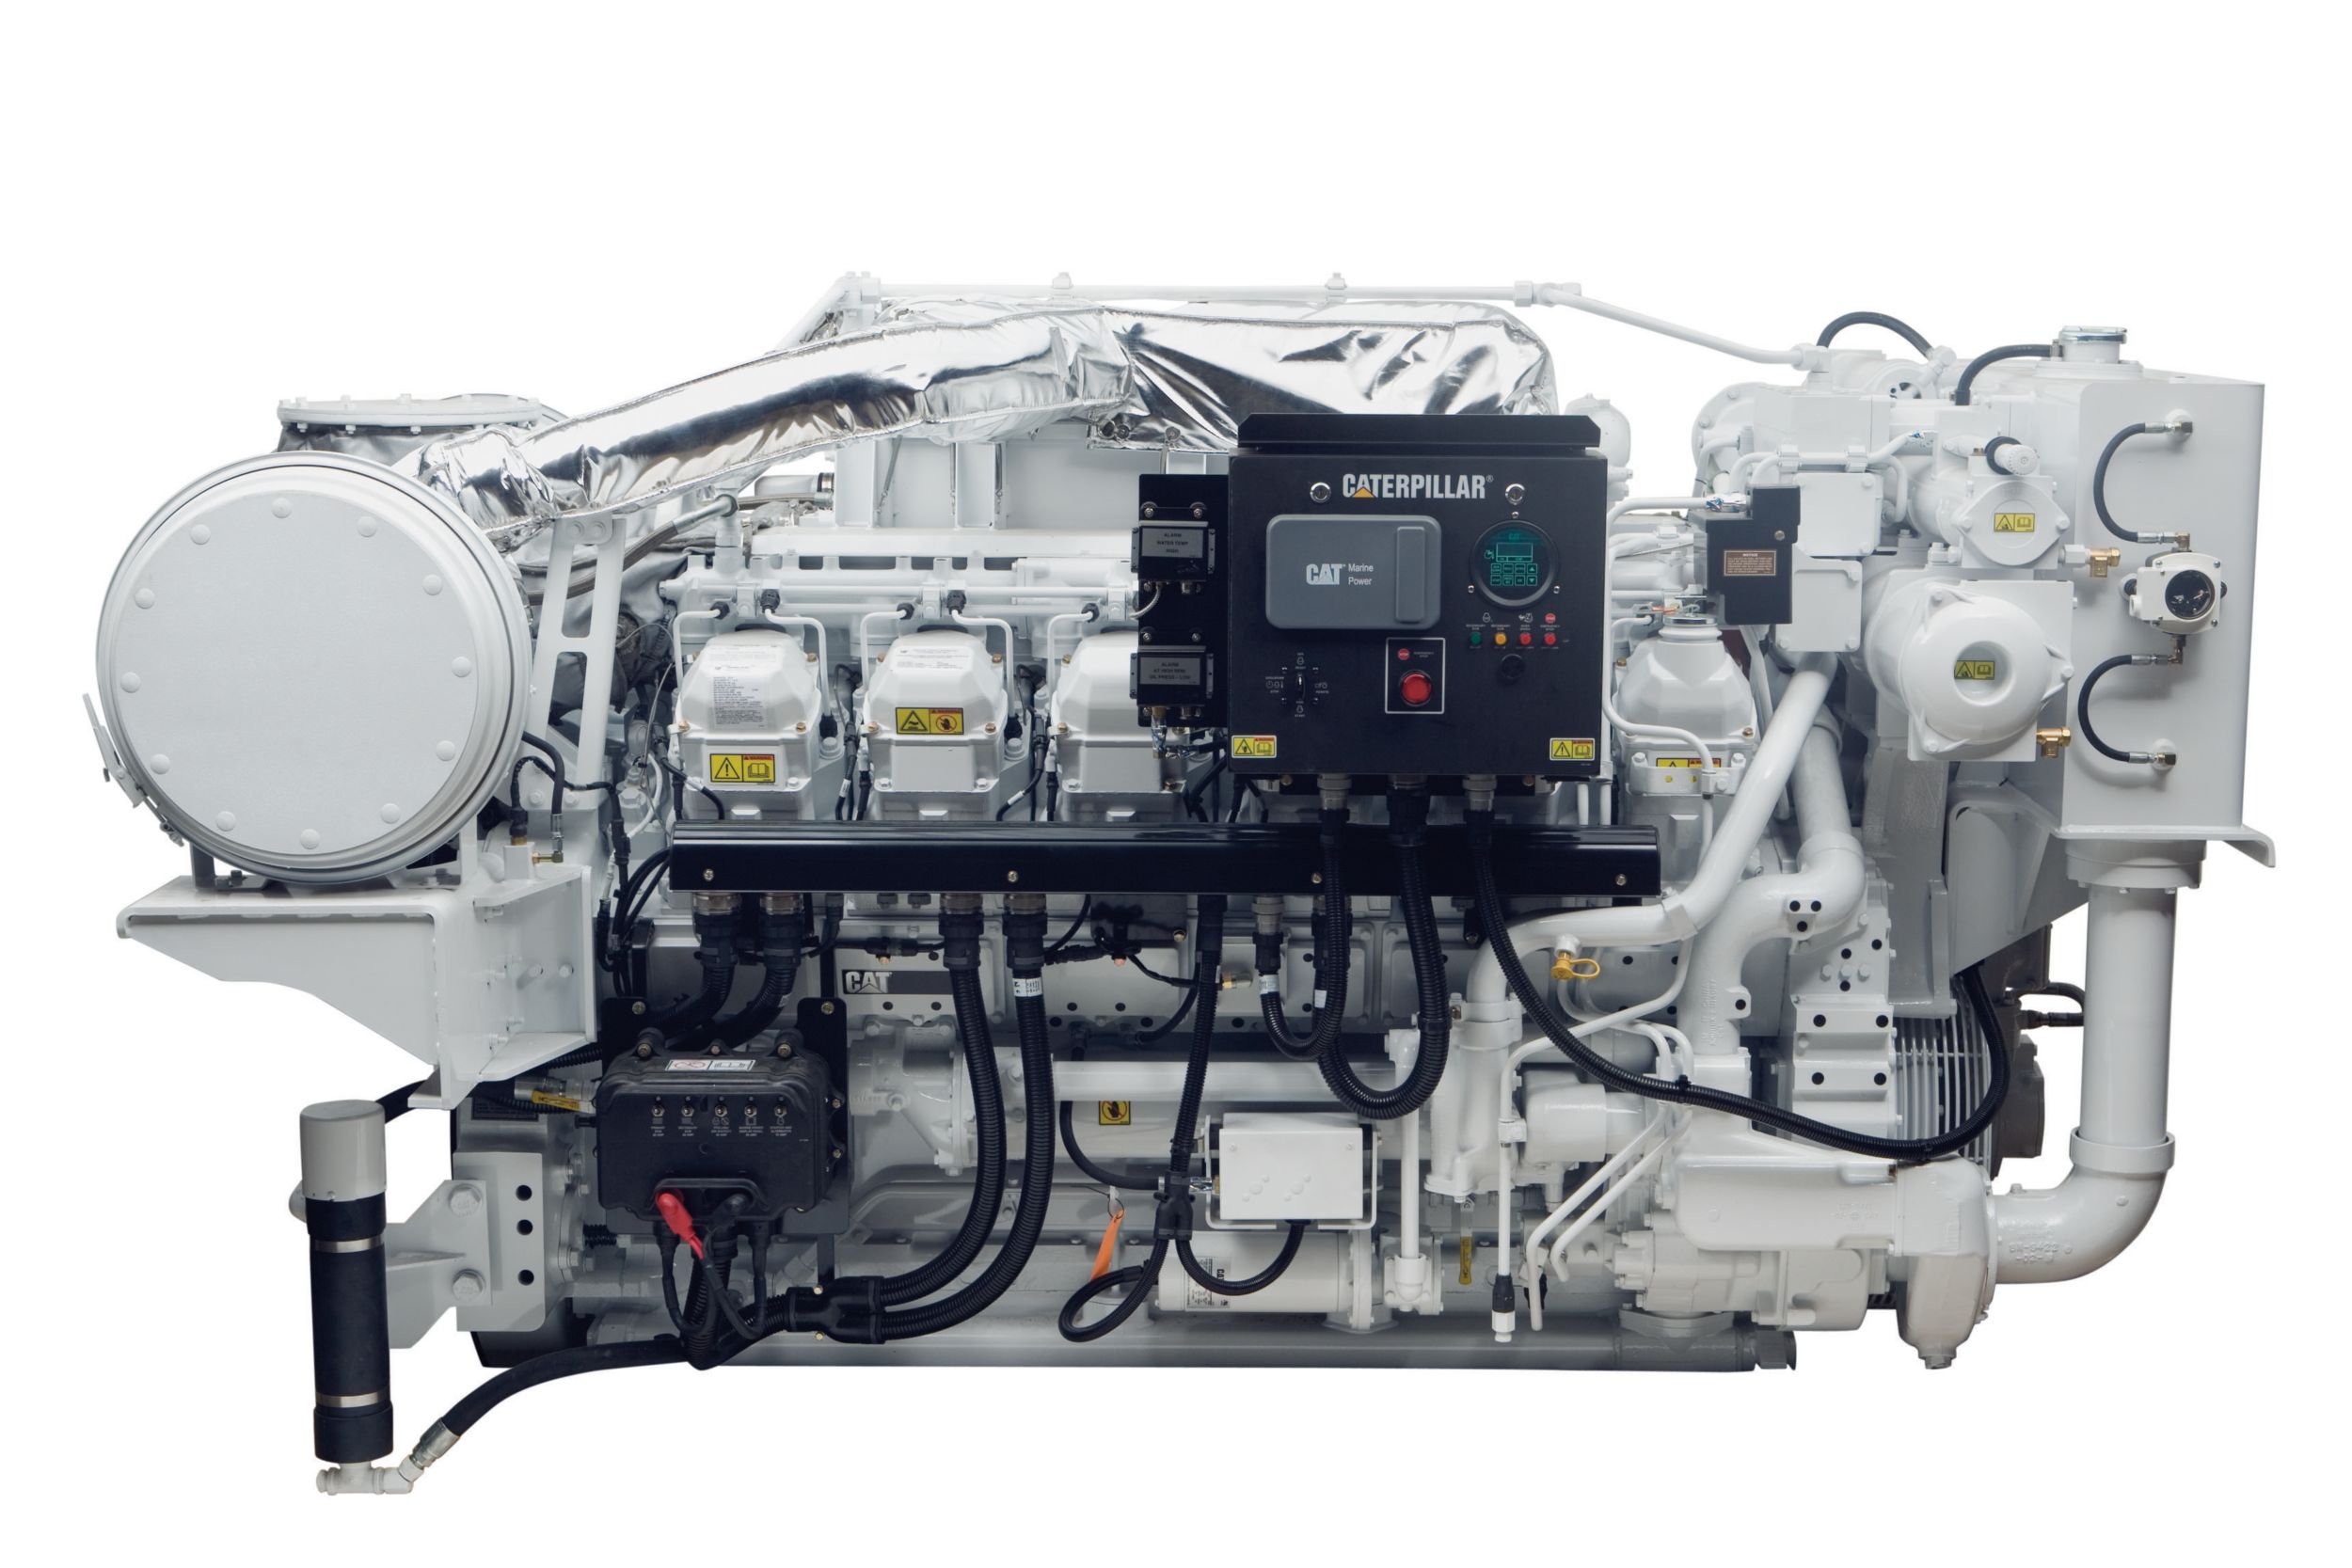  3512C High Displacement Propulsion Engine